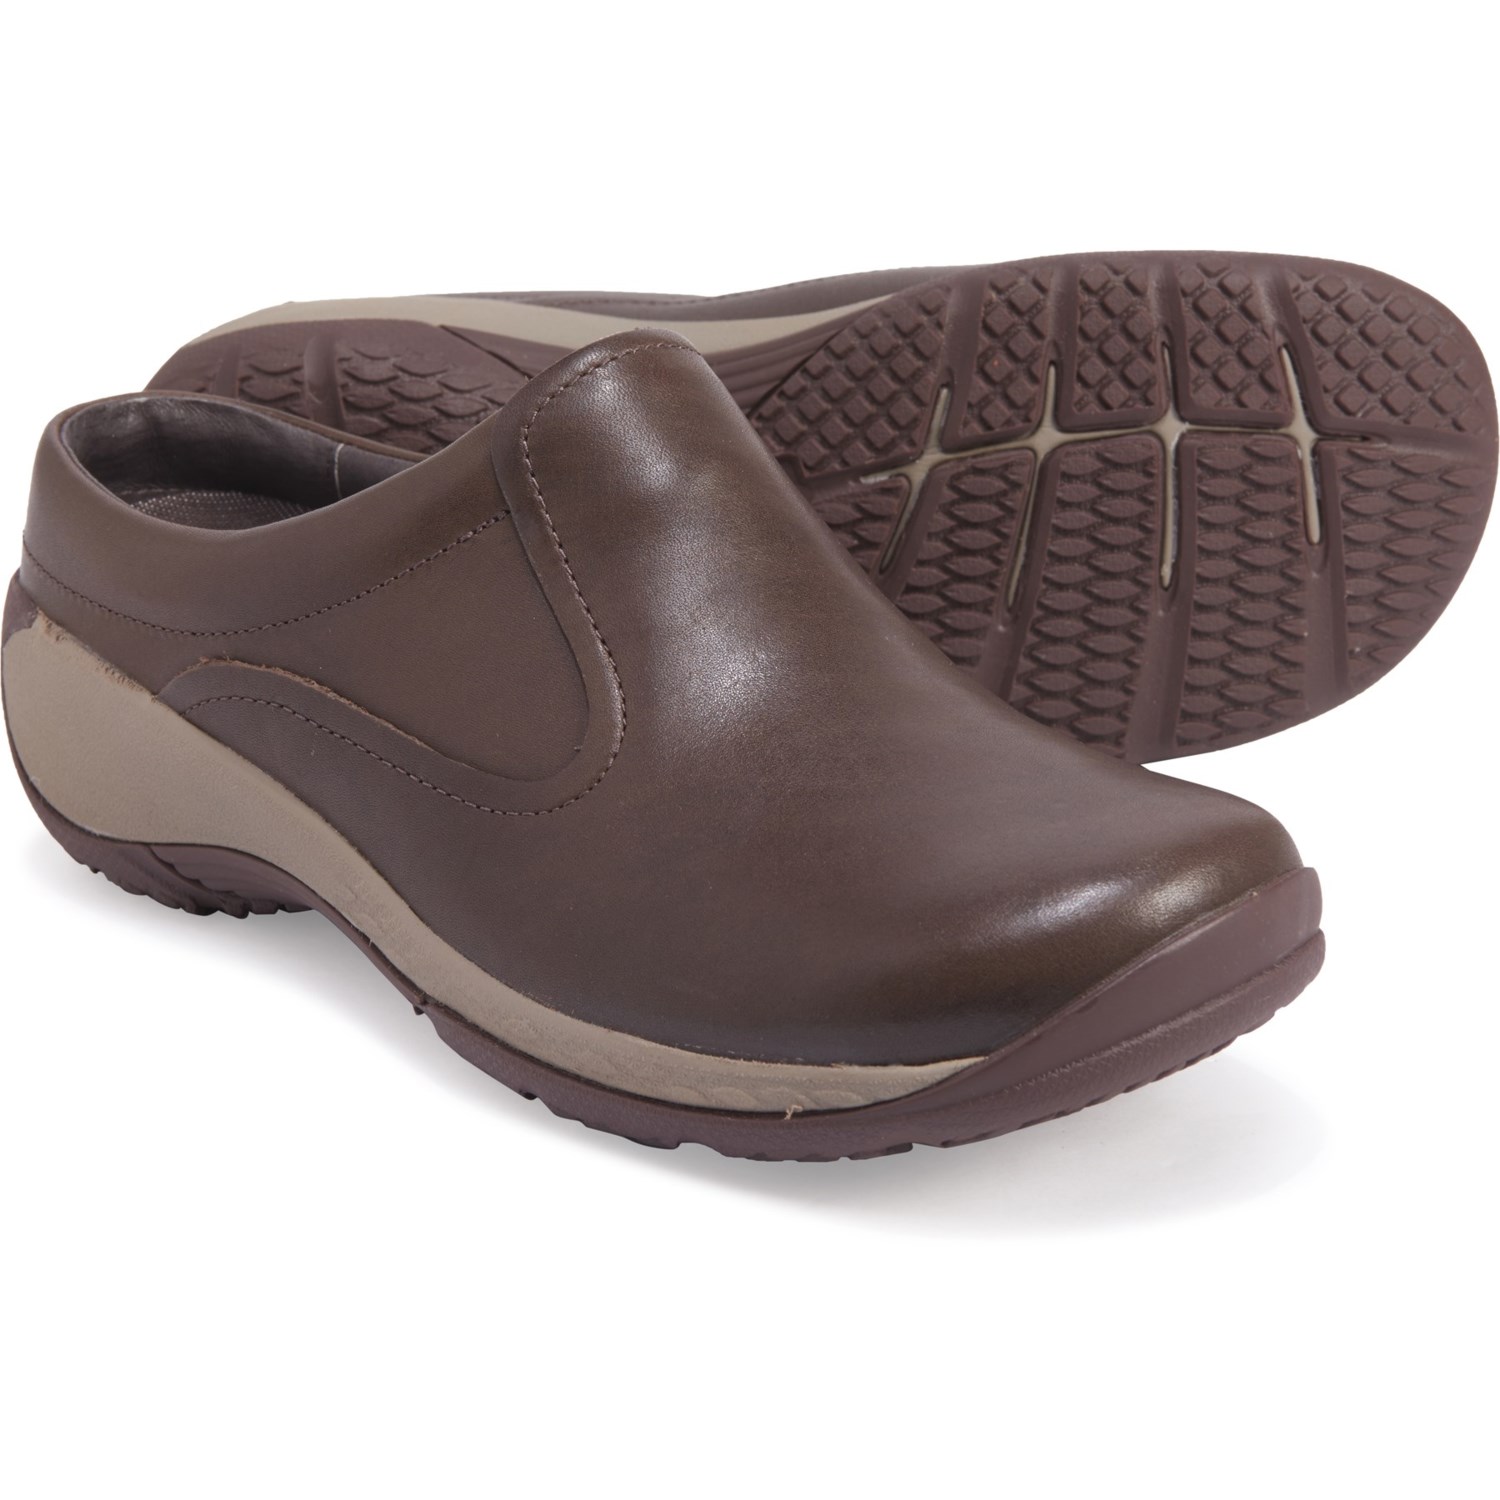 Merrell Encore Q2 Slide Shoes (For Women) - Save 56%